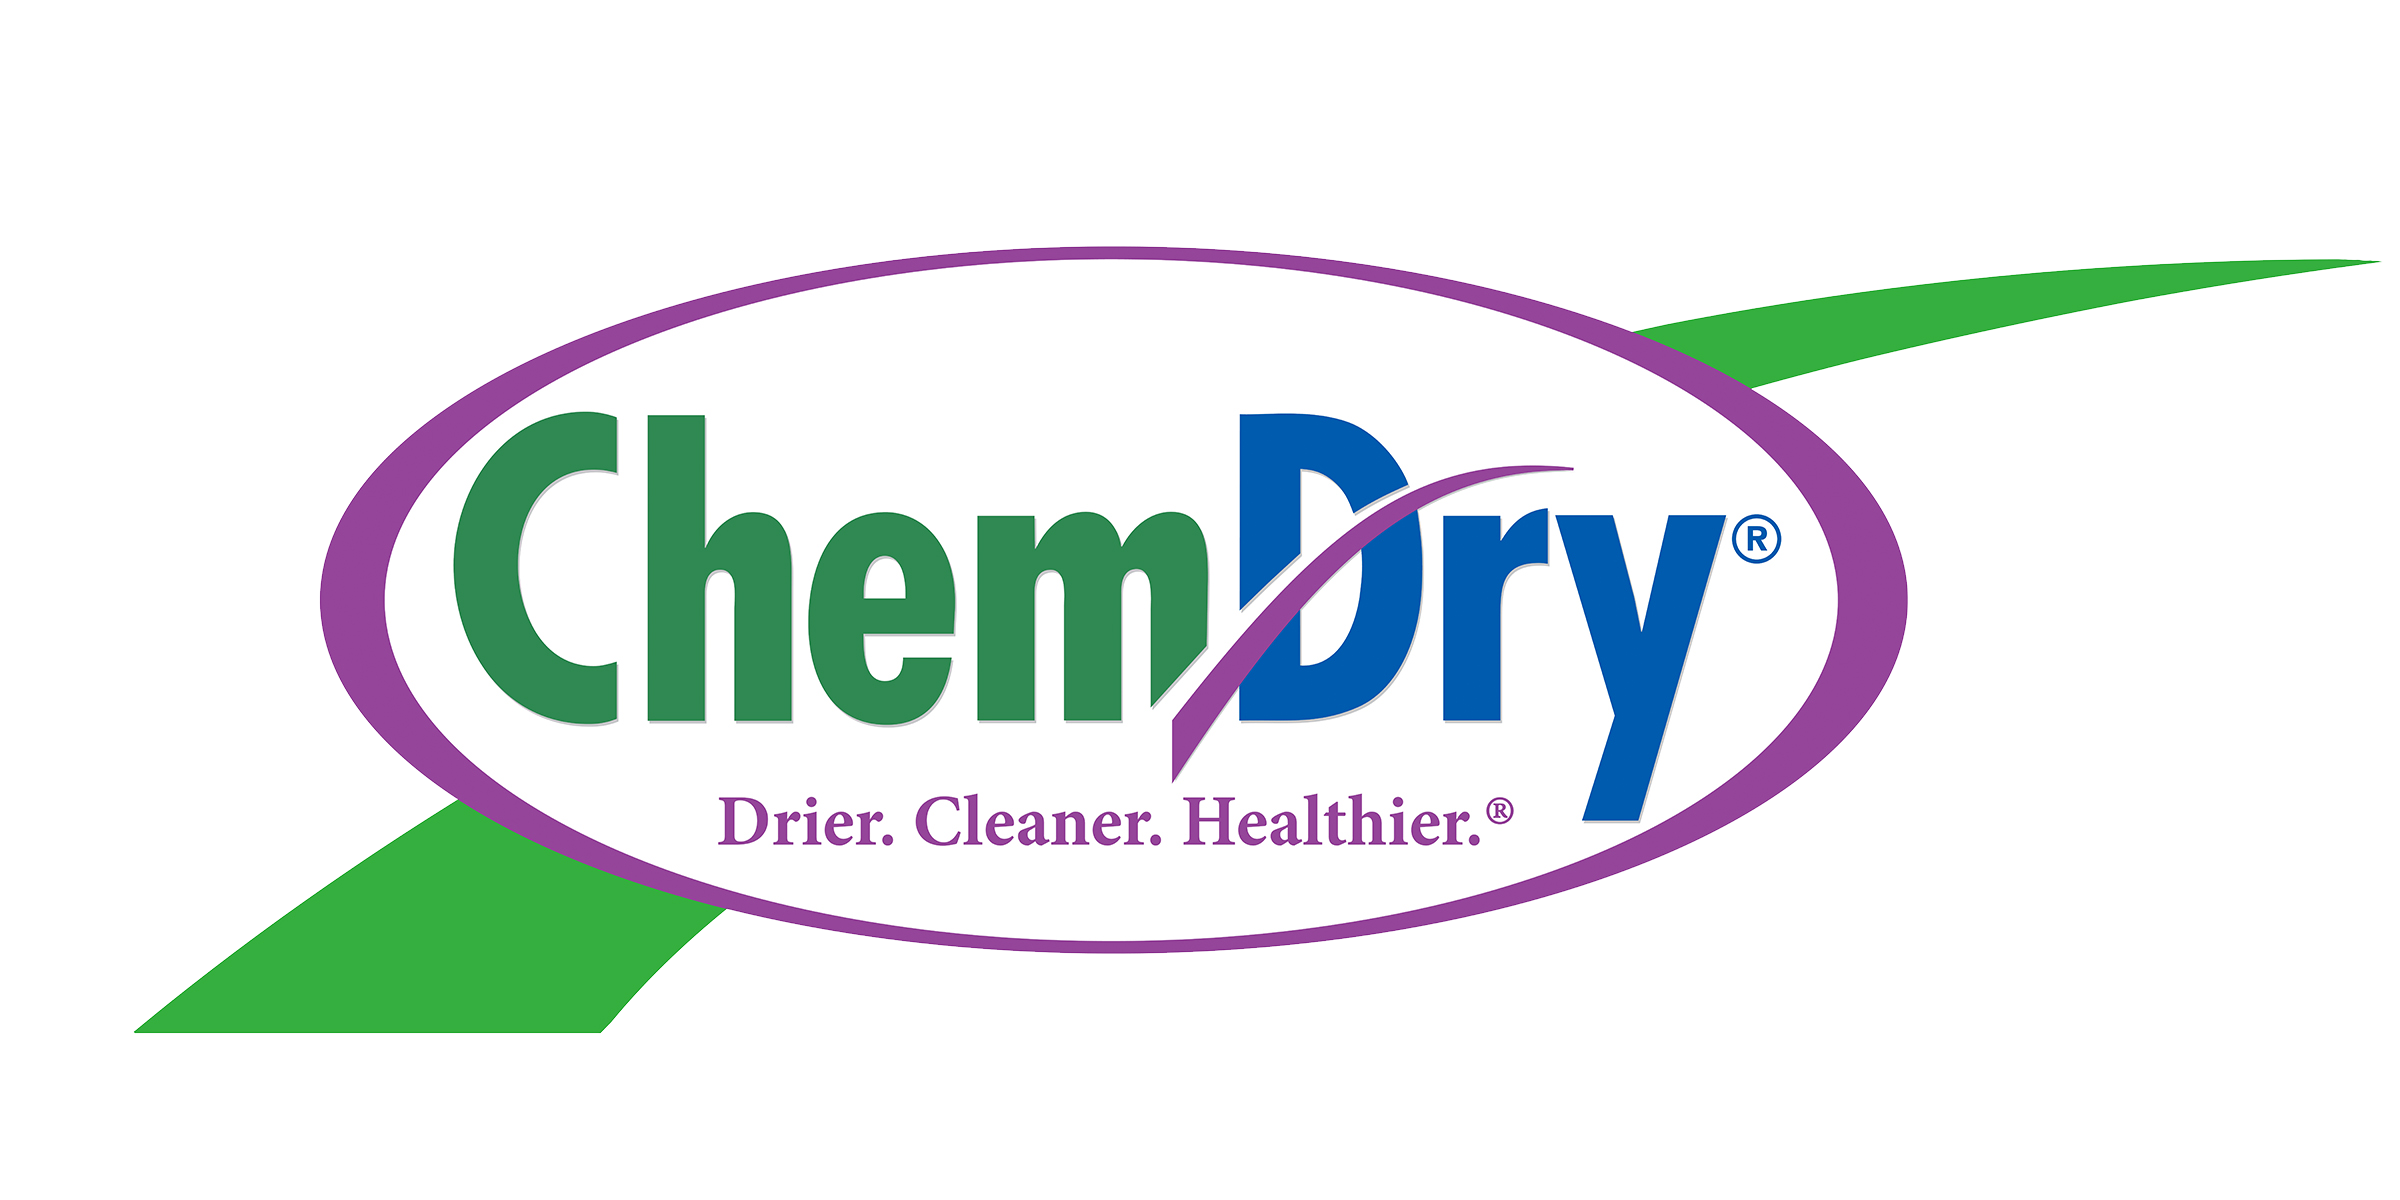 chemdry logo